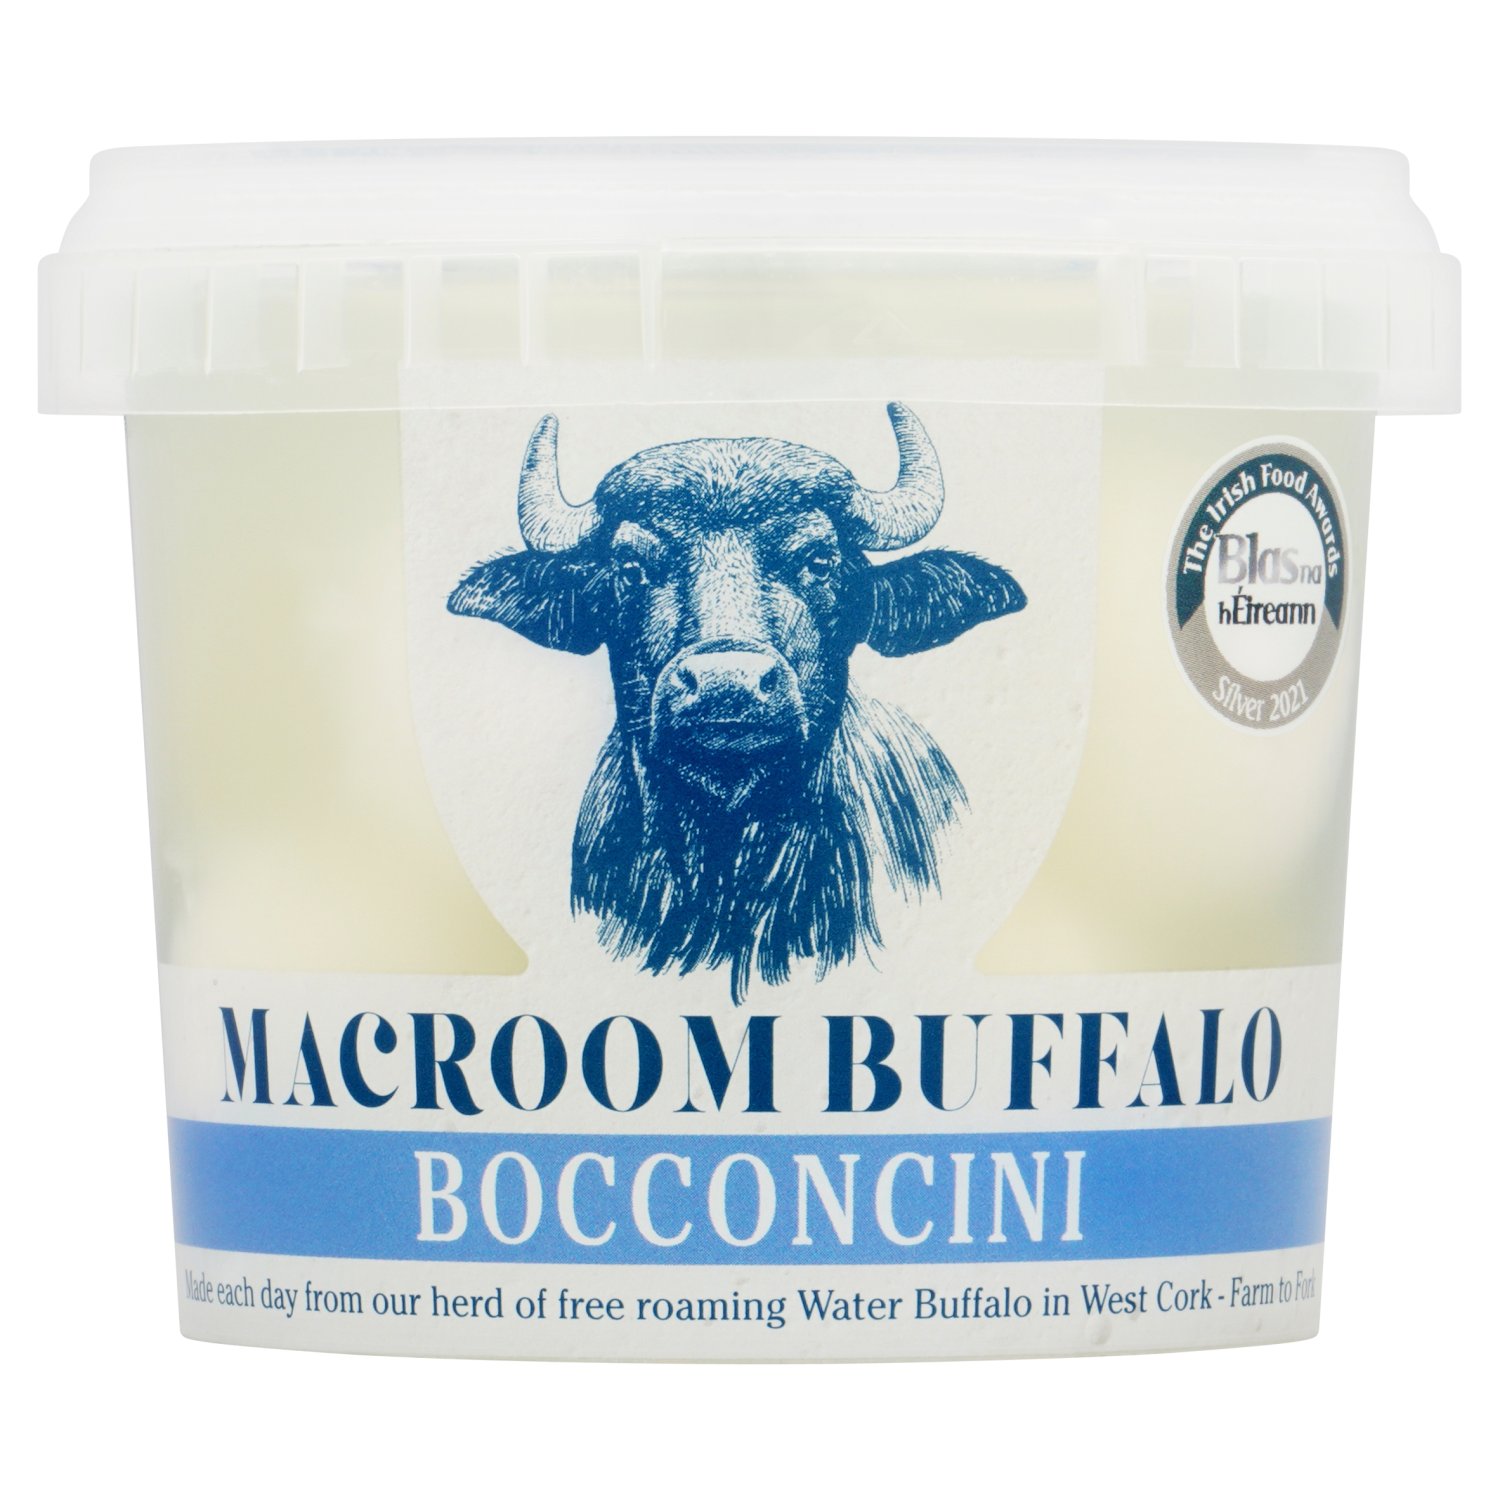 Macroom Buffalo Bocconcini (160 g)